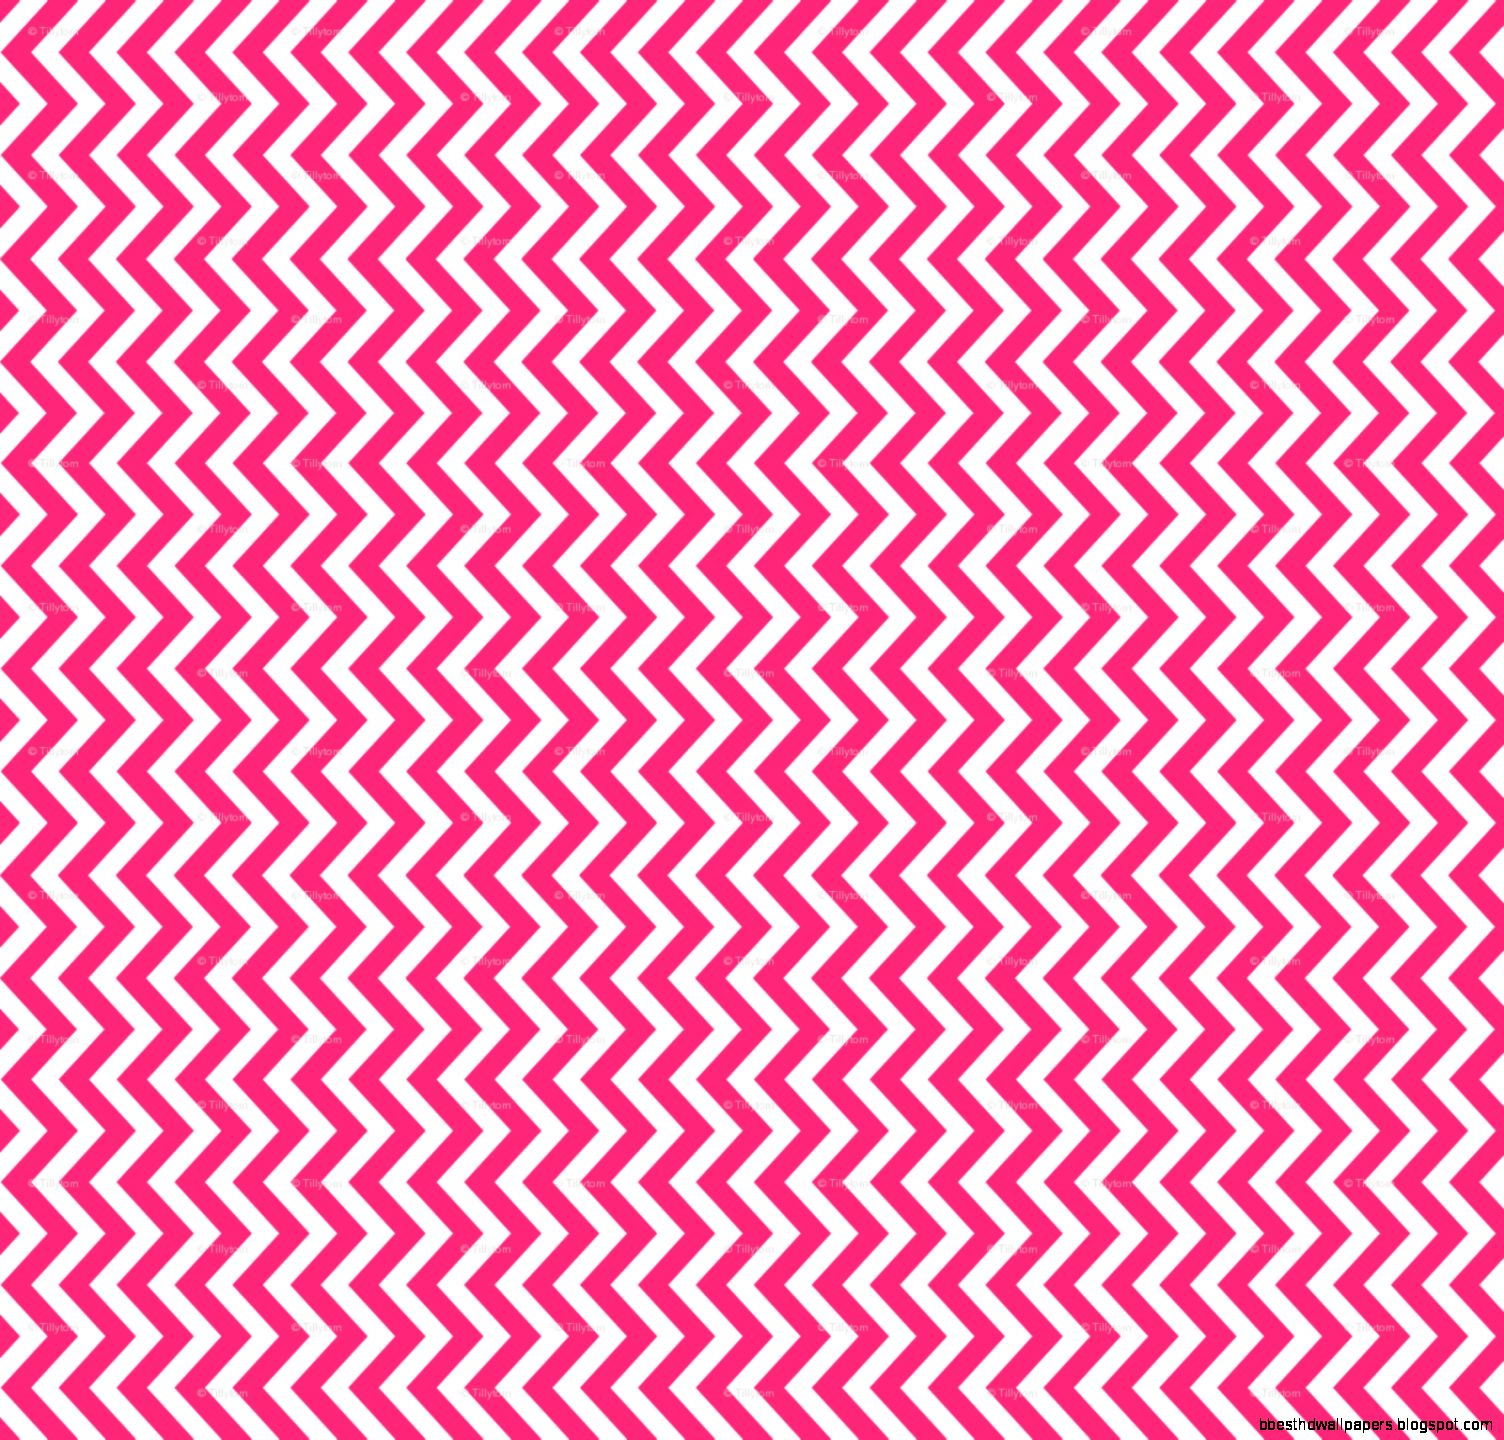 Pink Chevron Wallpaper Best HD Backgrounds